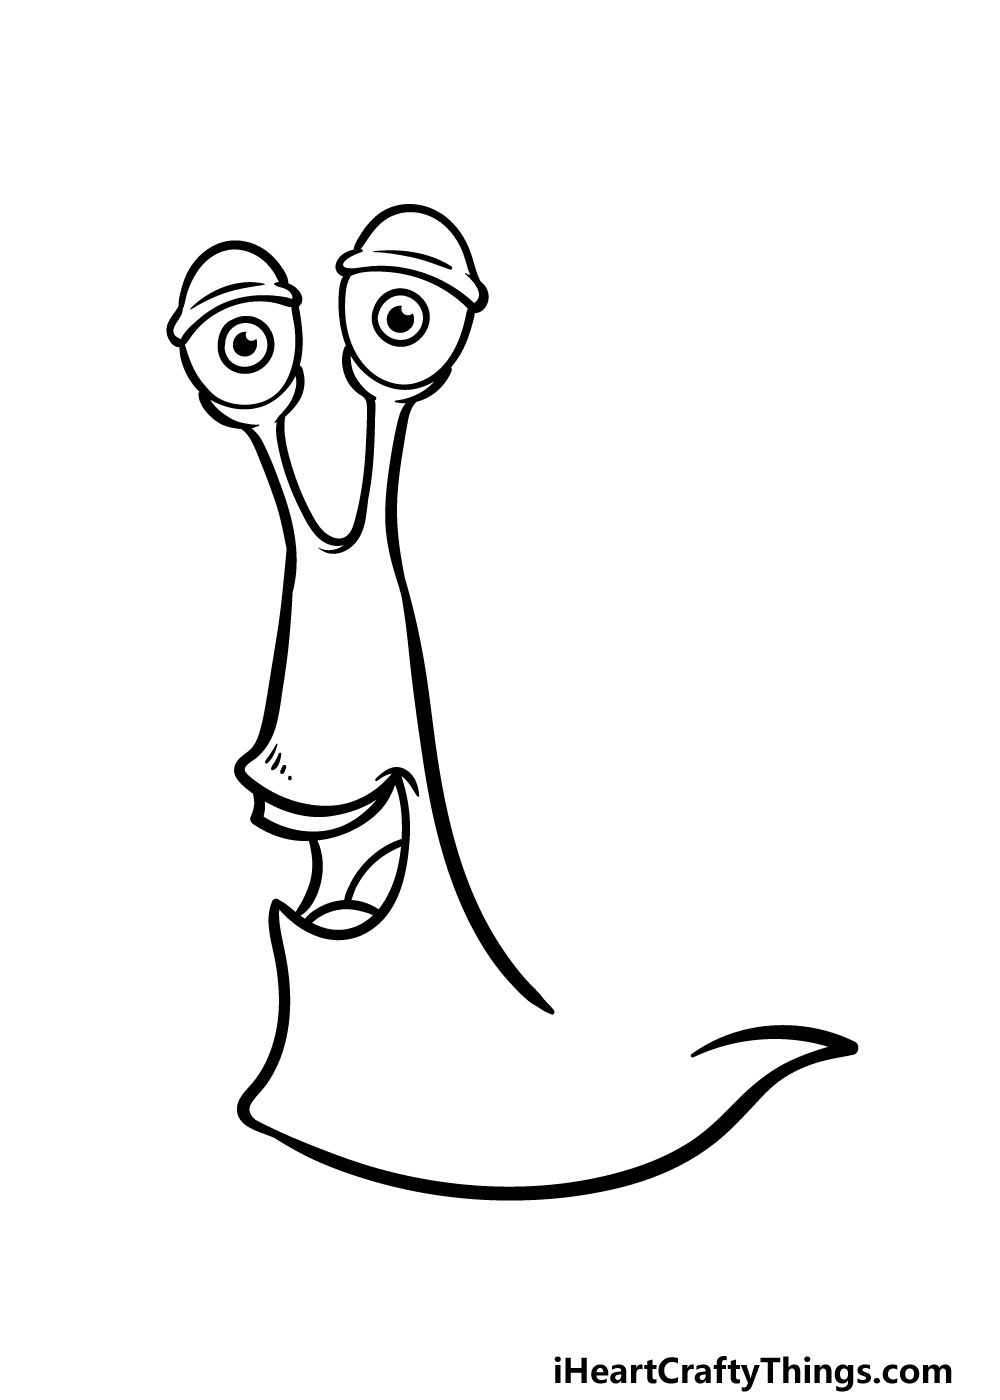 how to draw a cartoon snail step 3